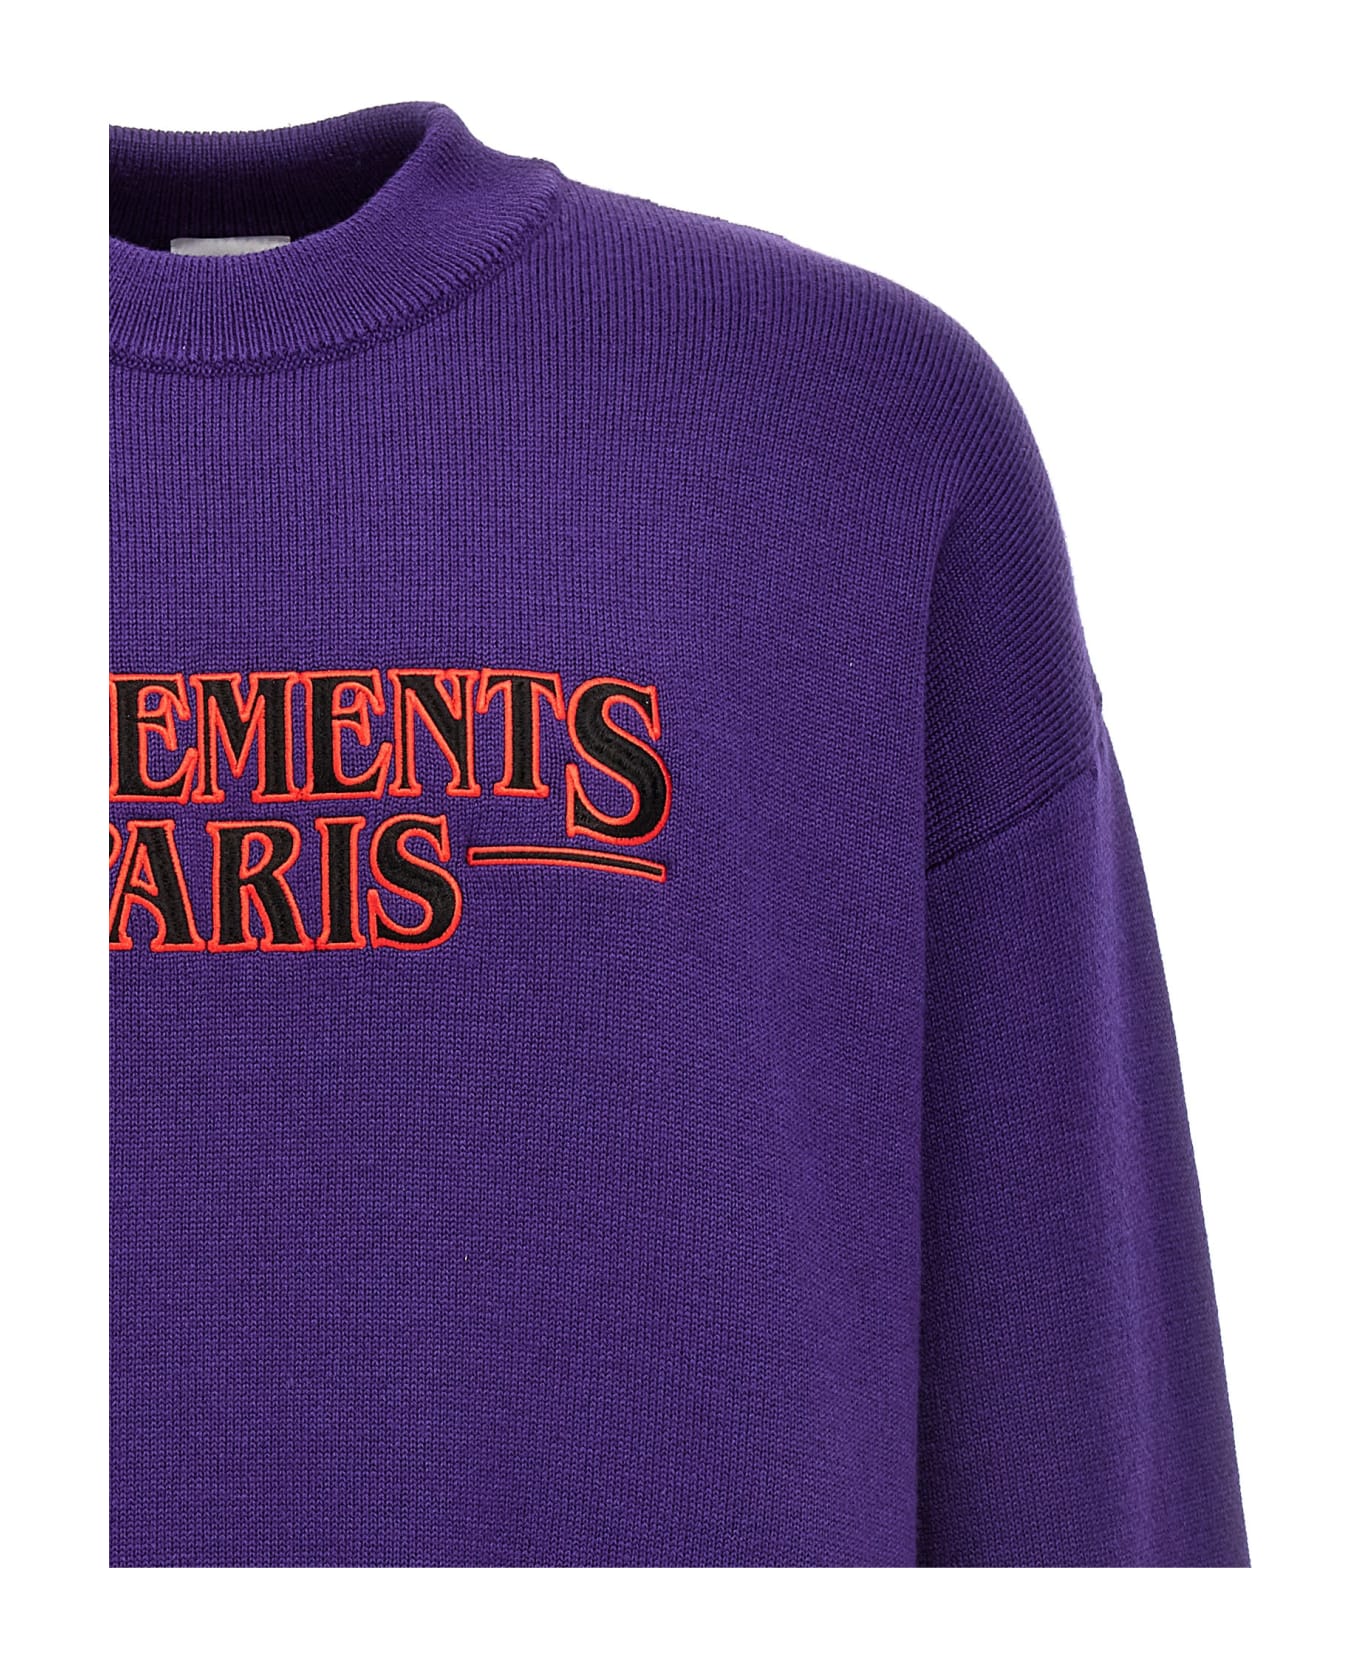 VETEMENTS Paris Sweater - Purple フリース